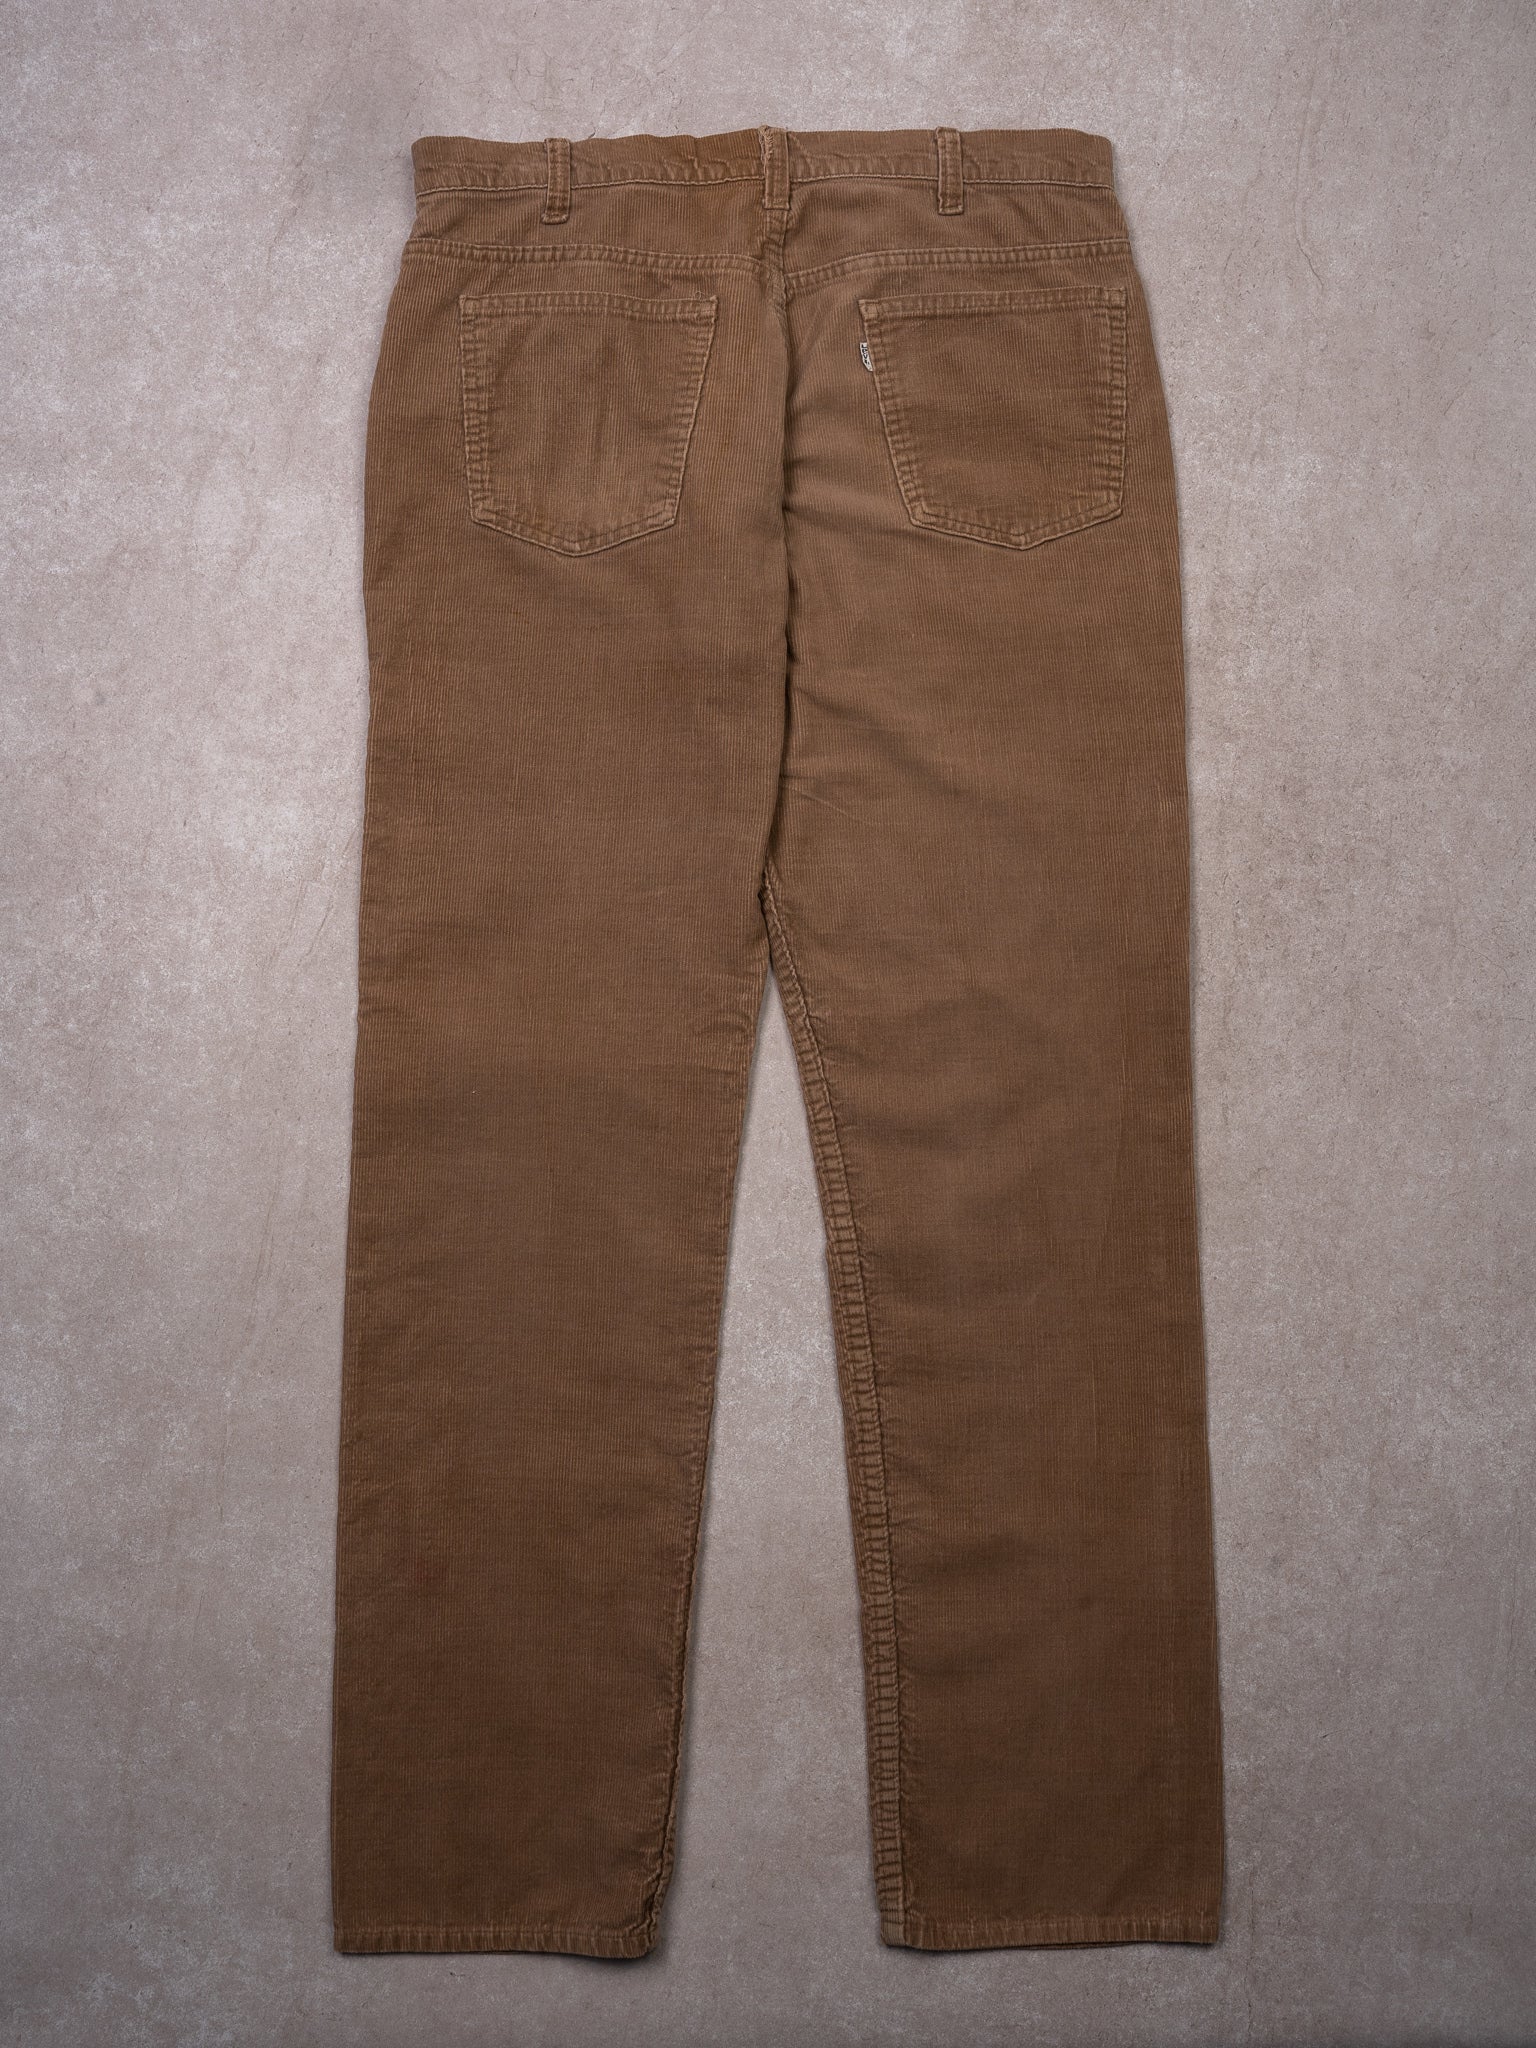 Vintage Beige Levi Corduroy White Tab Pants (36 x 33)